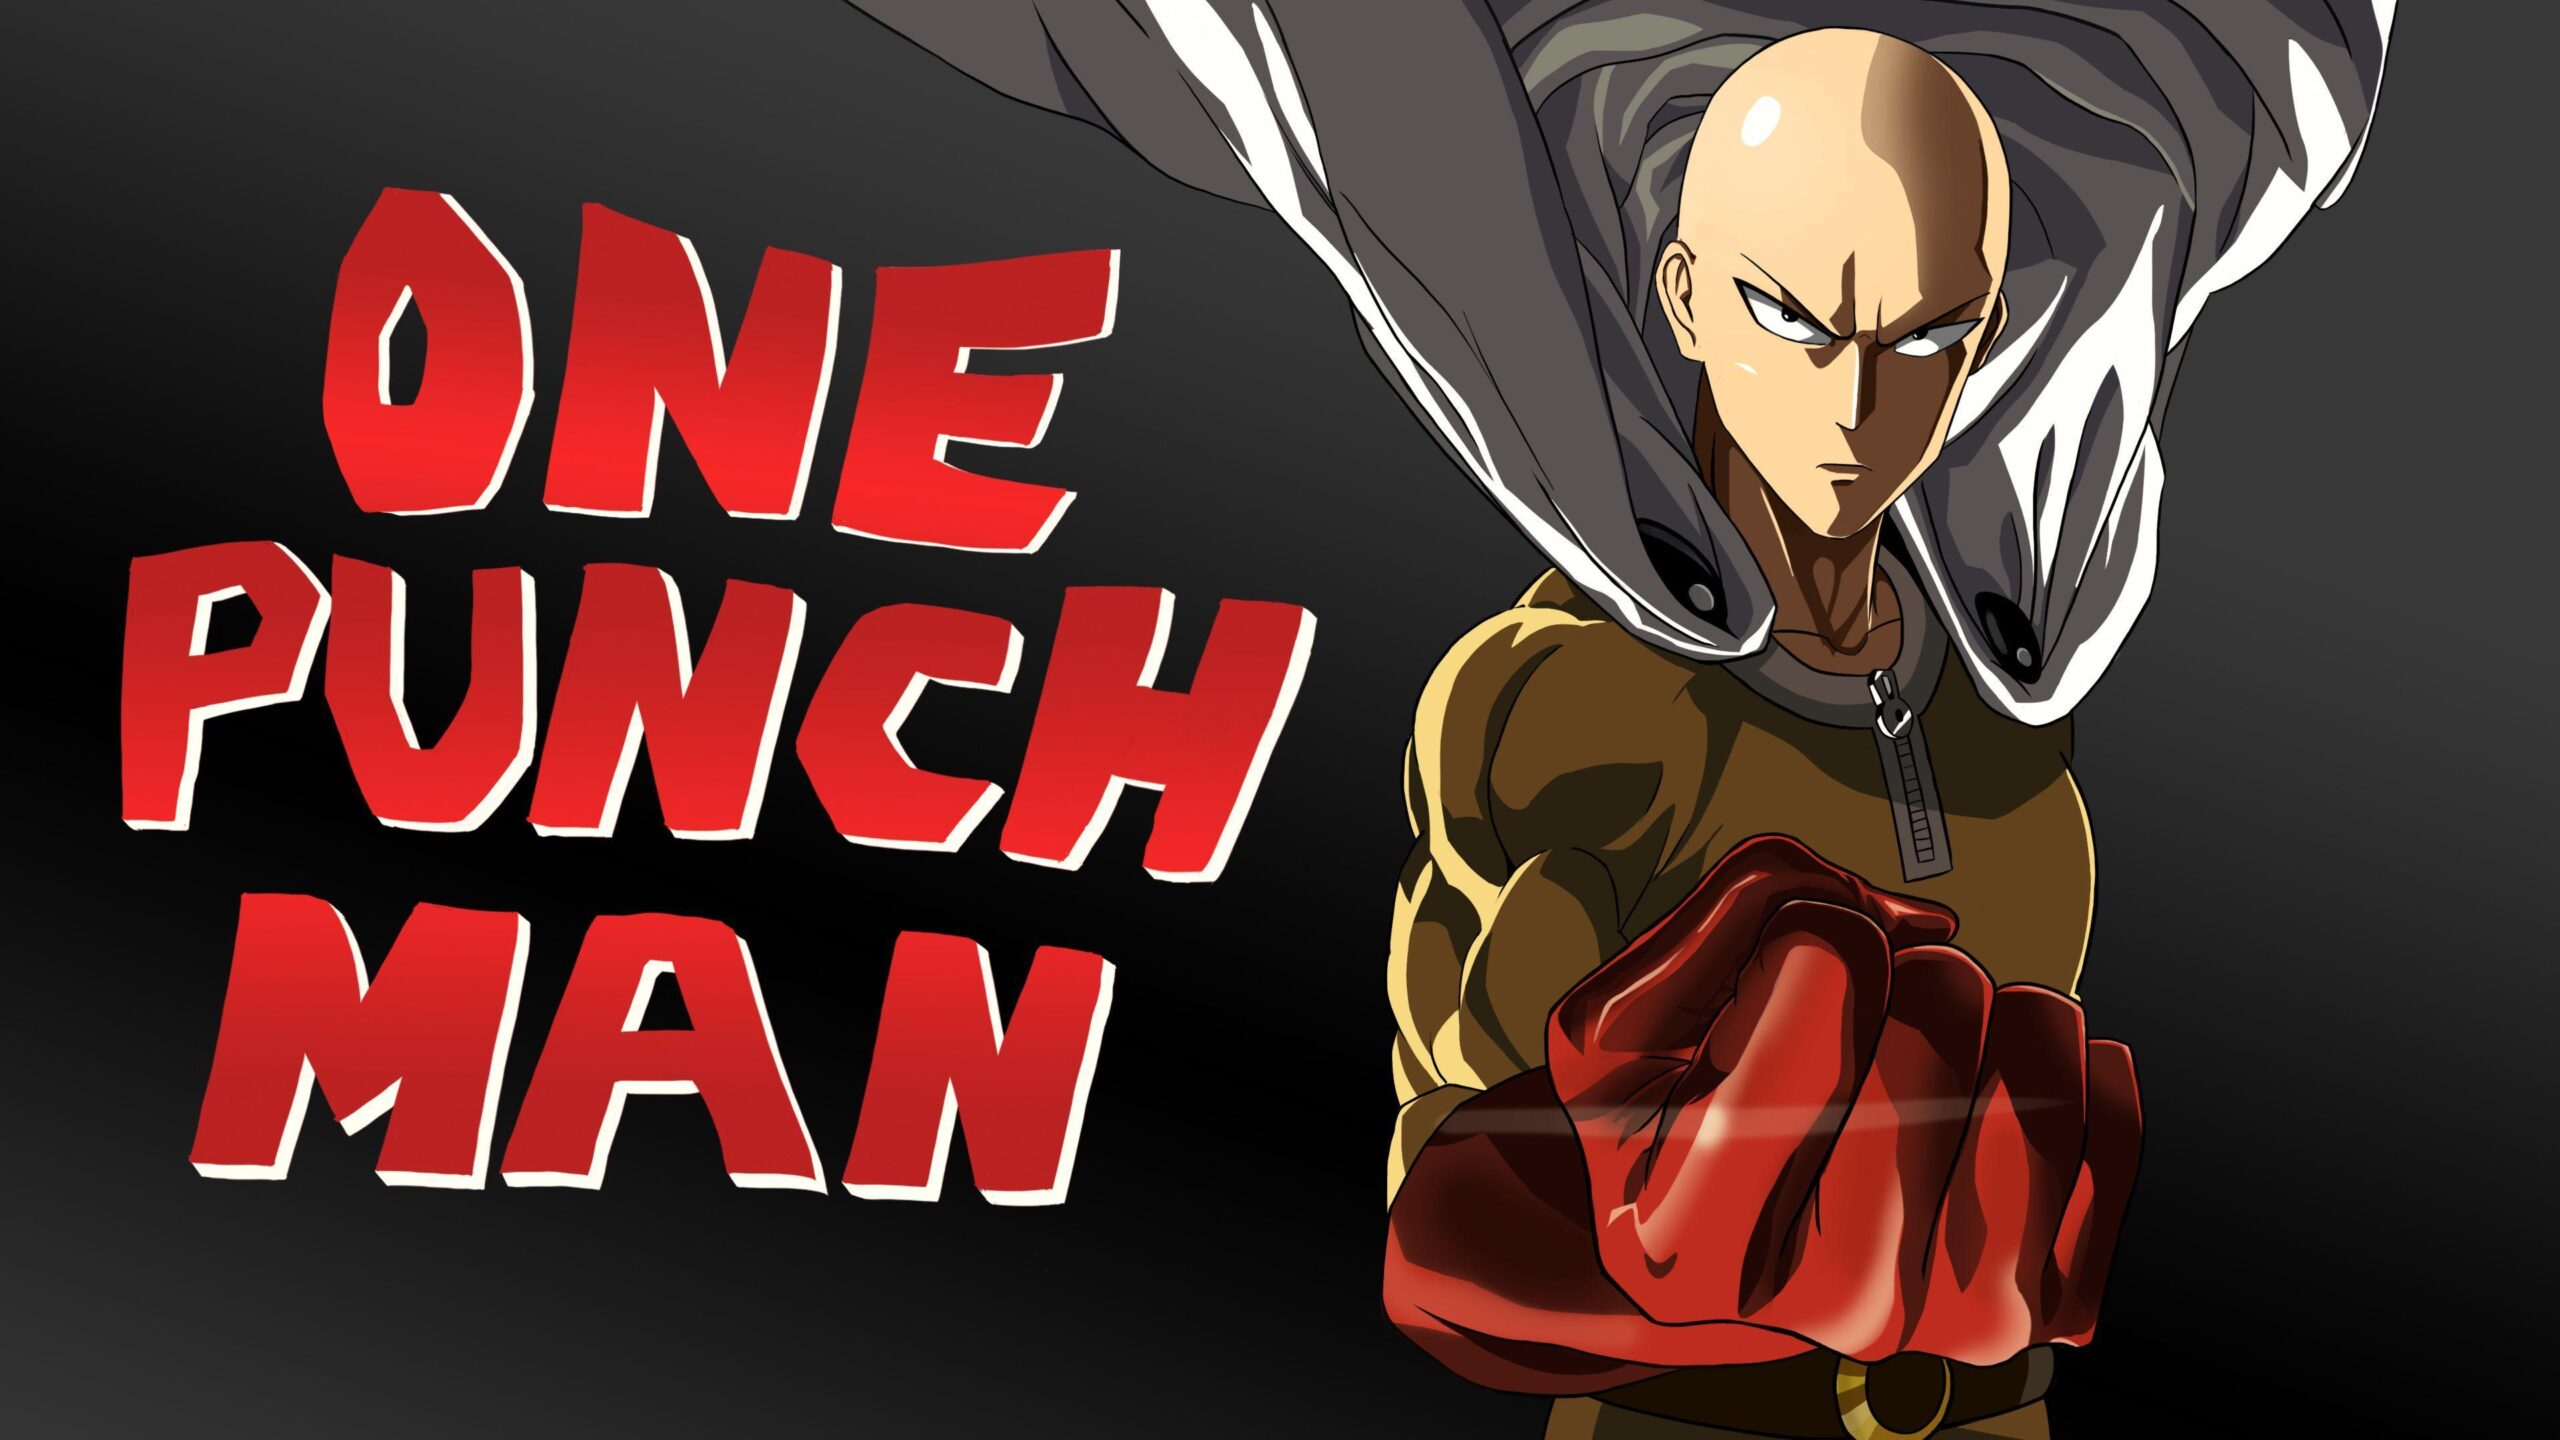 One Punch Man Free Desktop Wallpaper, One-Punch Man, Anime